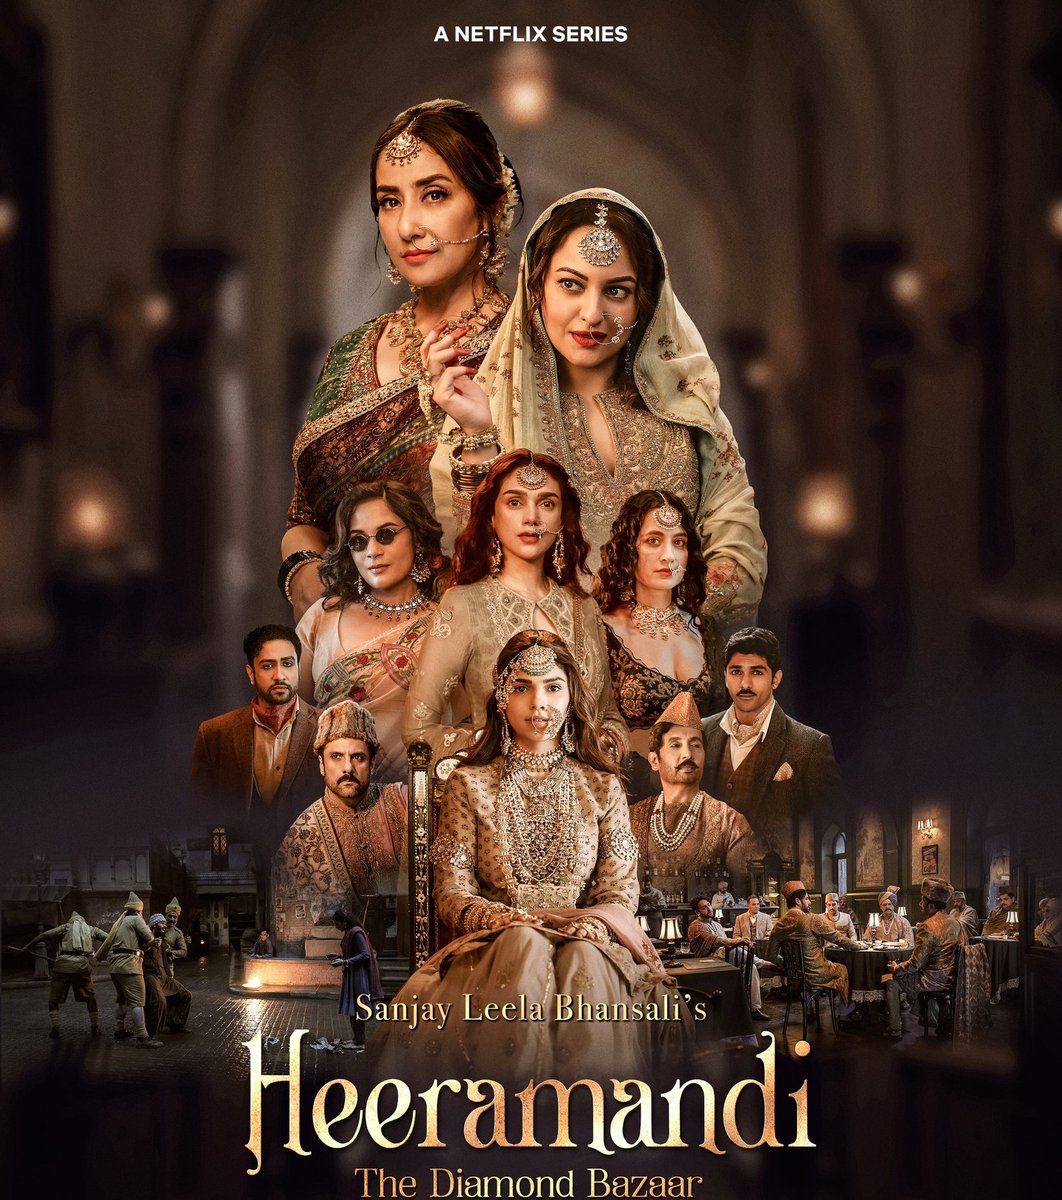 #SanjayLeelaBhansali debut Series #Heeramandi The Diamond Bazaar Trailer Out Now... Trailer Link: youtu.be/WvzZYynDkwA